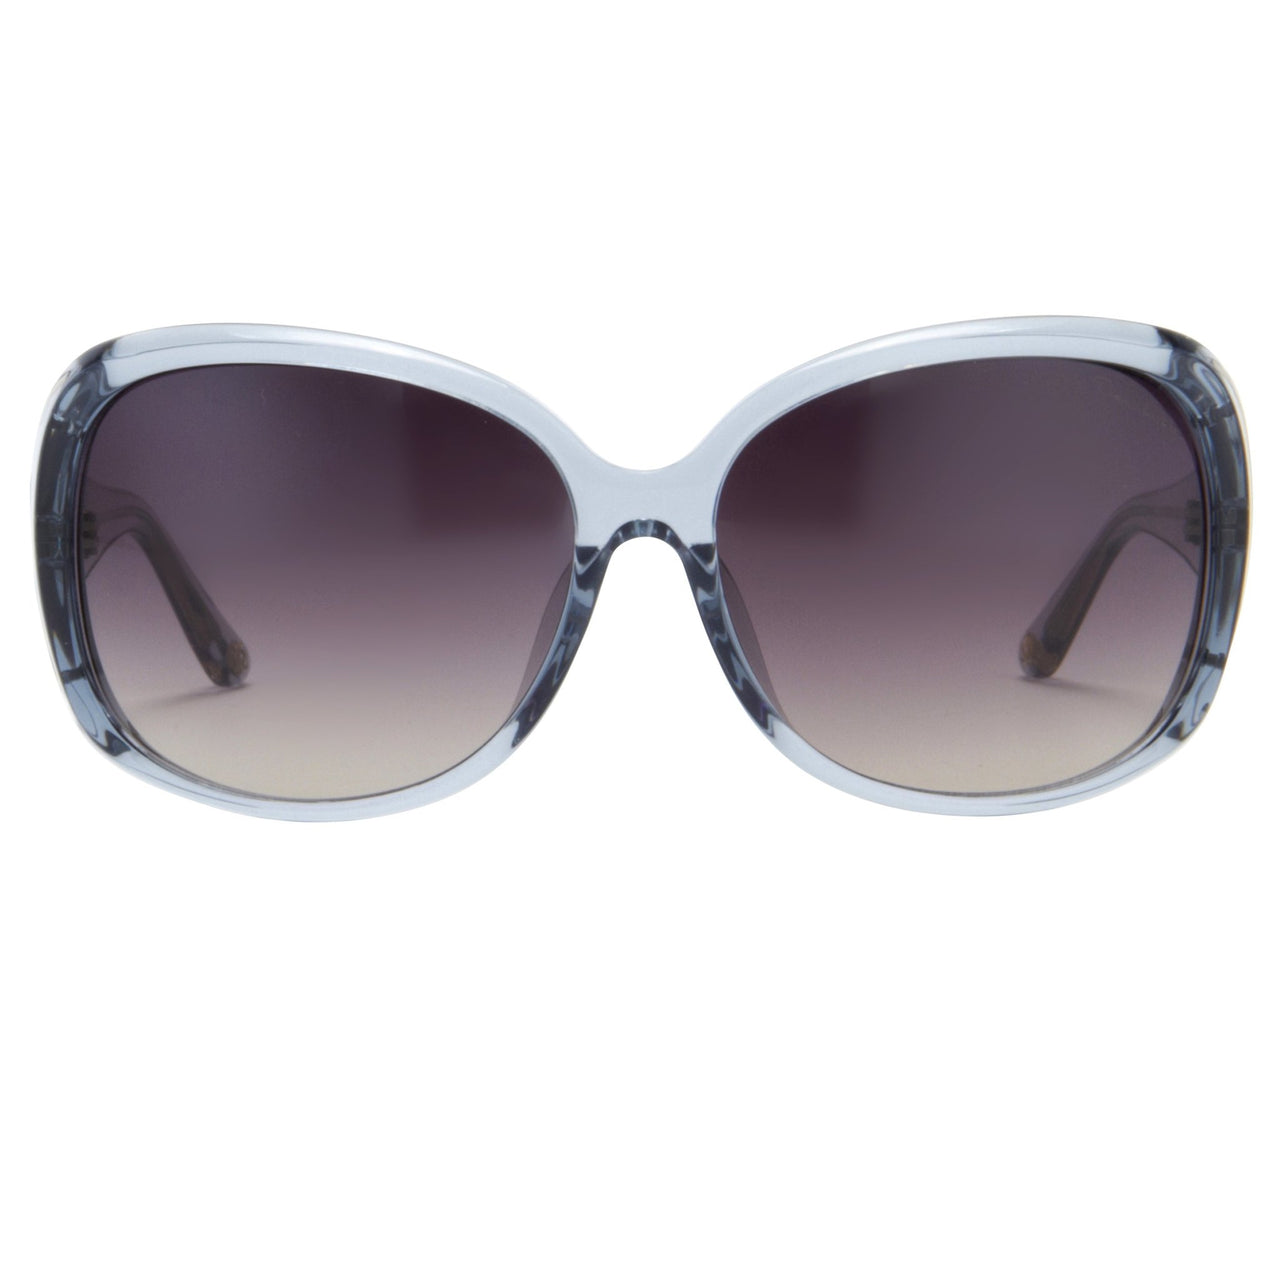 Oscar De La Renta Sunglasses Oversized Frame Blue Light Gold and Dark Grey Lenses Category 3 - ODLR55C5SUN - Watches & Crystals